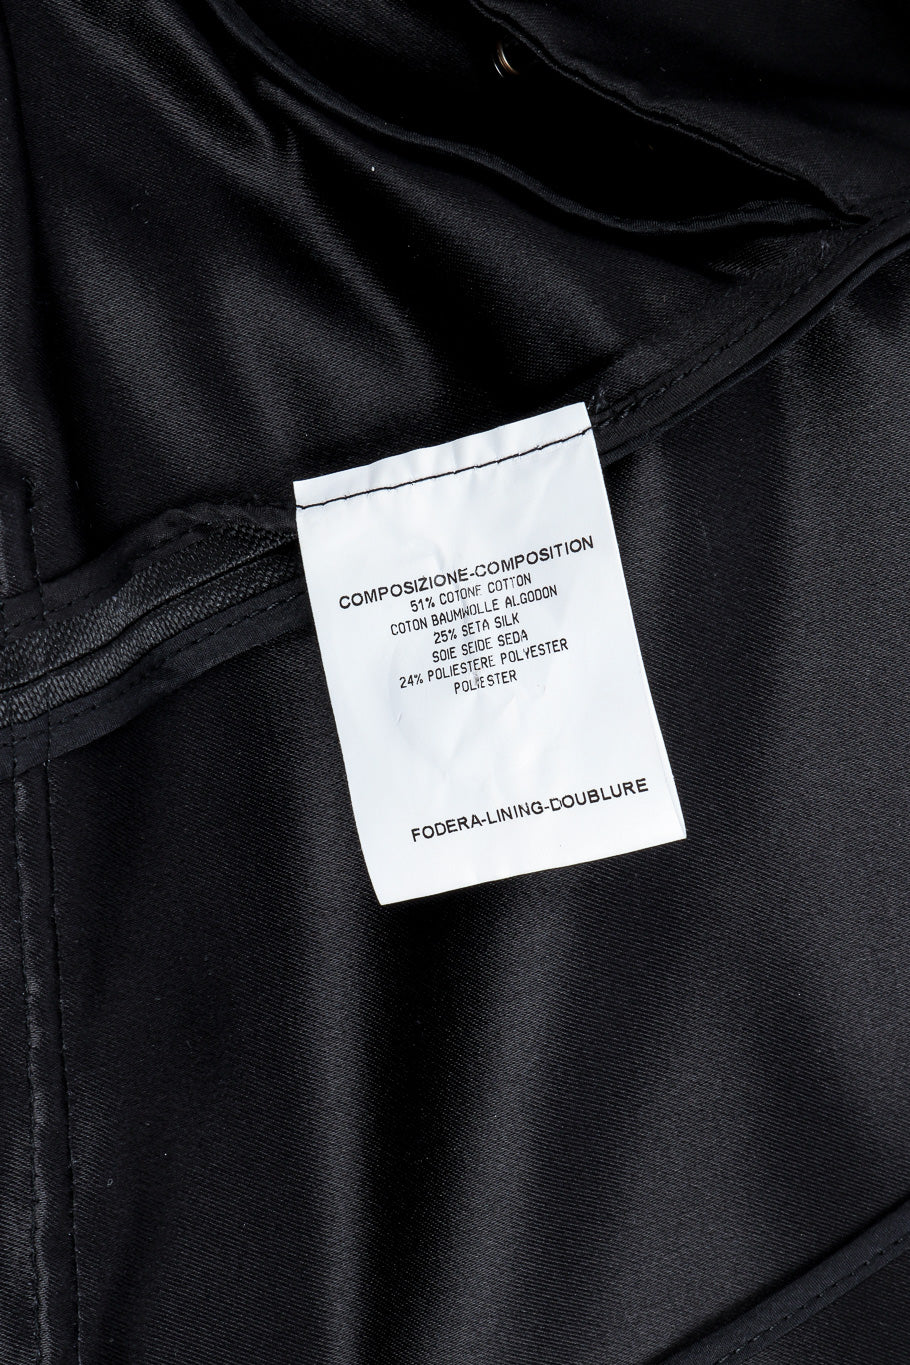 Grommet jacket by Yves Saint Laurent composition tag  @recessla